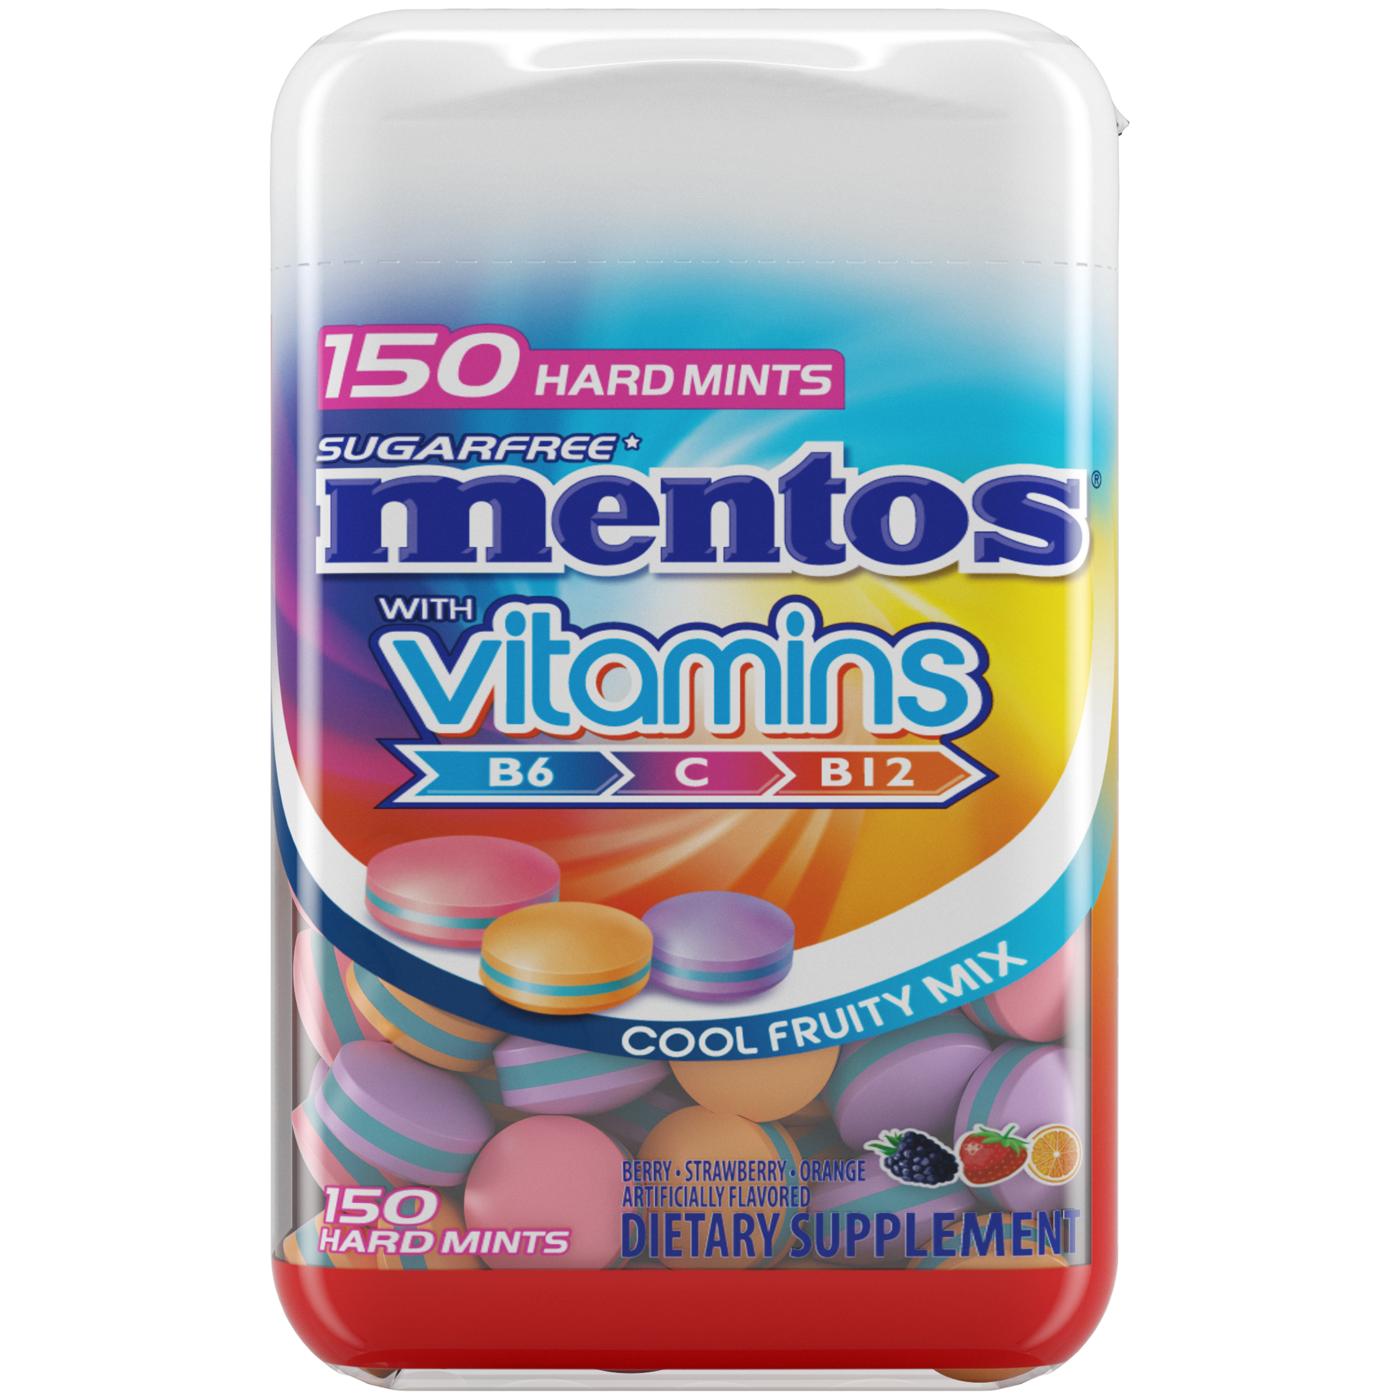 Mentos Vitamins Cool Fruity Mix Sugarfree Hard Mints; image 1 of 3